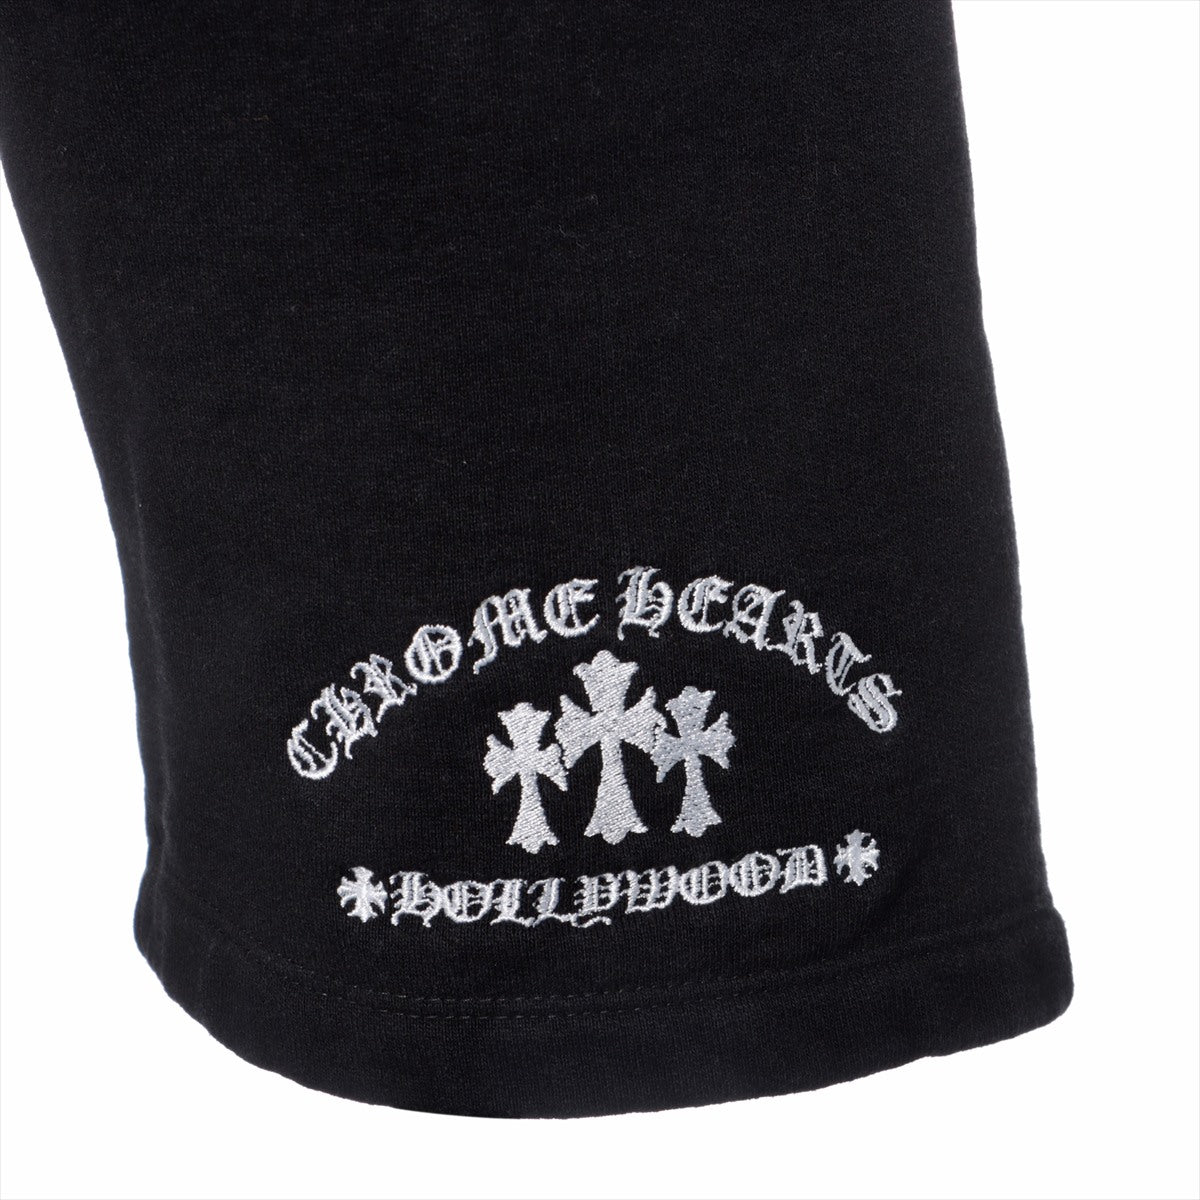 Chrome Hearts Short pants Cotton size S Black cross embroidery SAILIN ON HLF PNTS